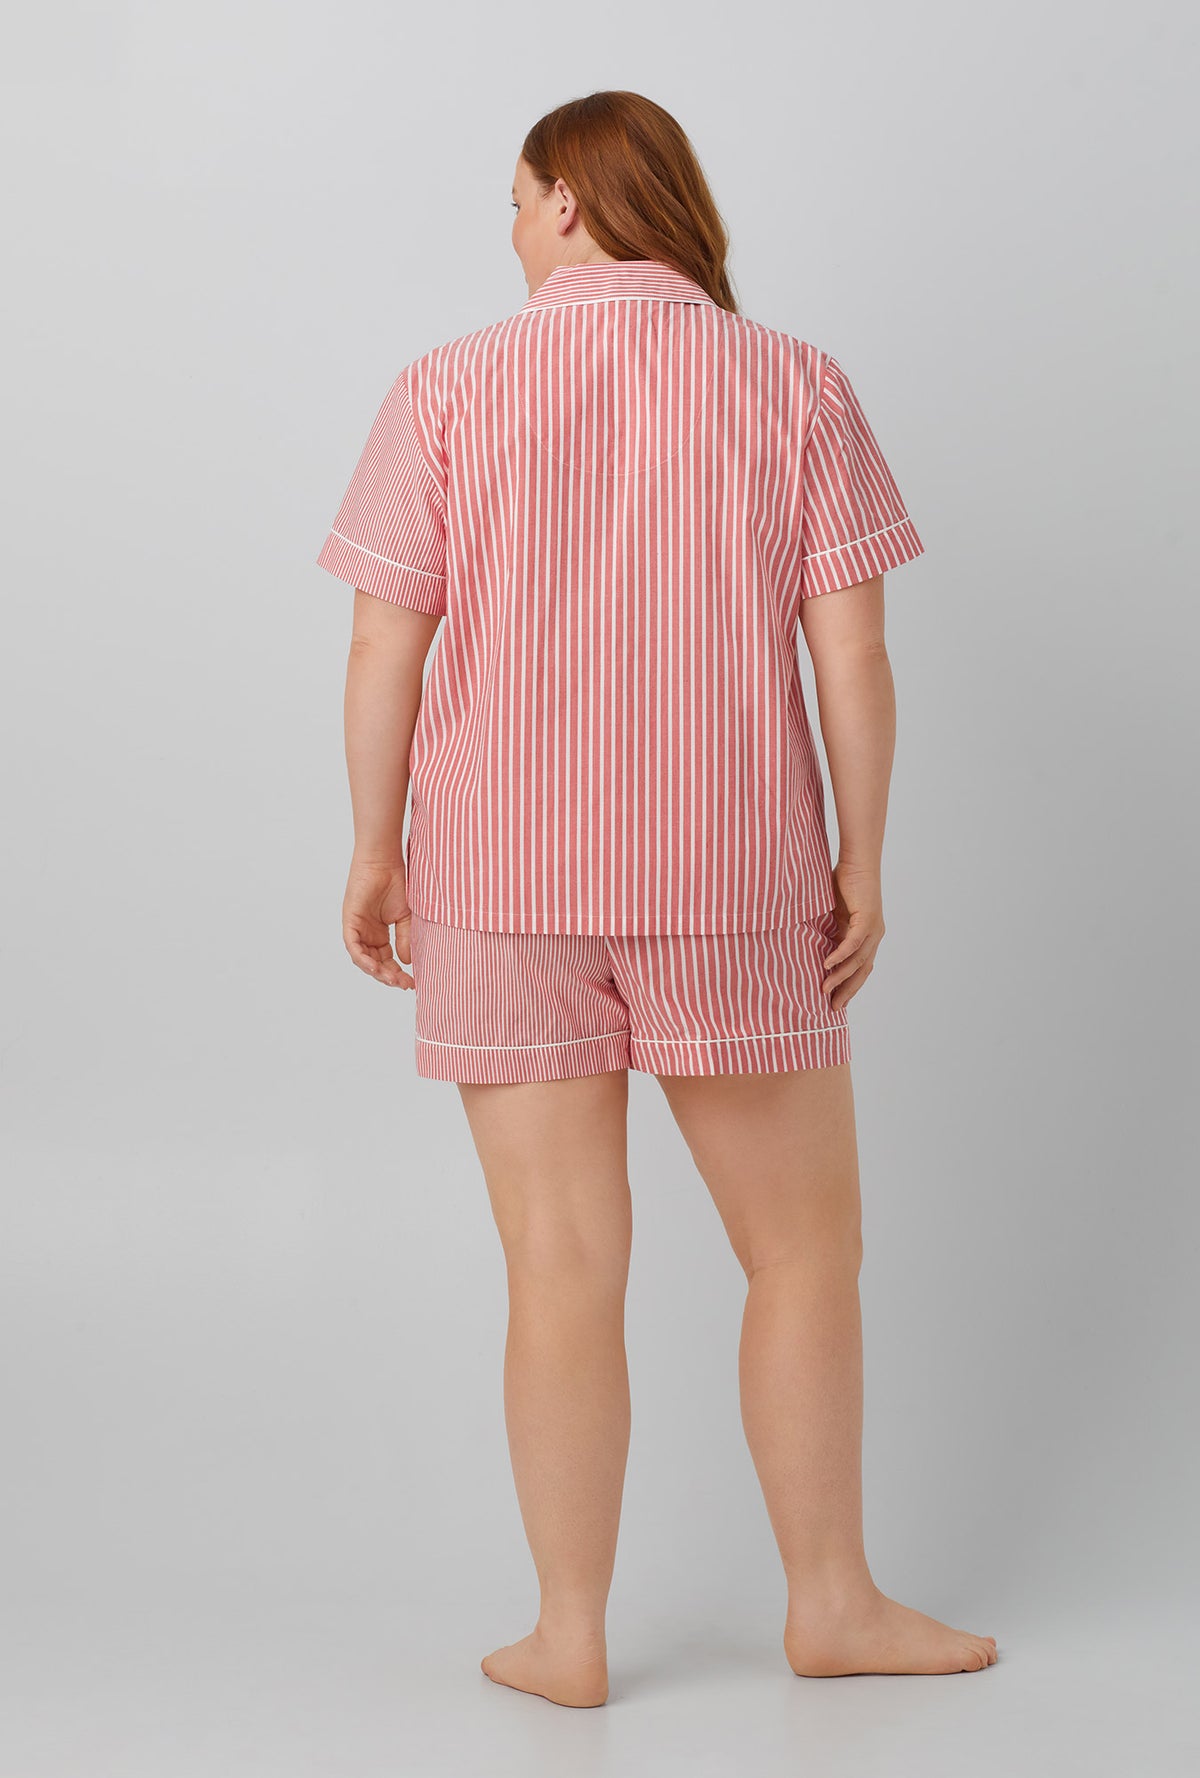 A lady wearing Crimson Stripe Short Sleeve Classic Shorty Woven Cotton Poplin PJ Set